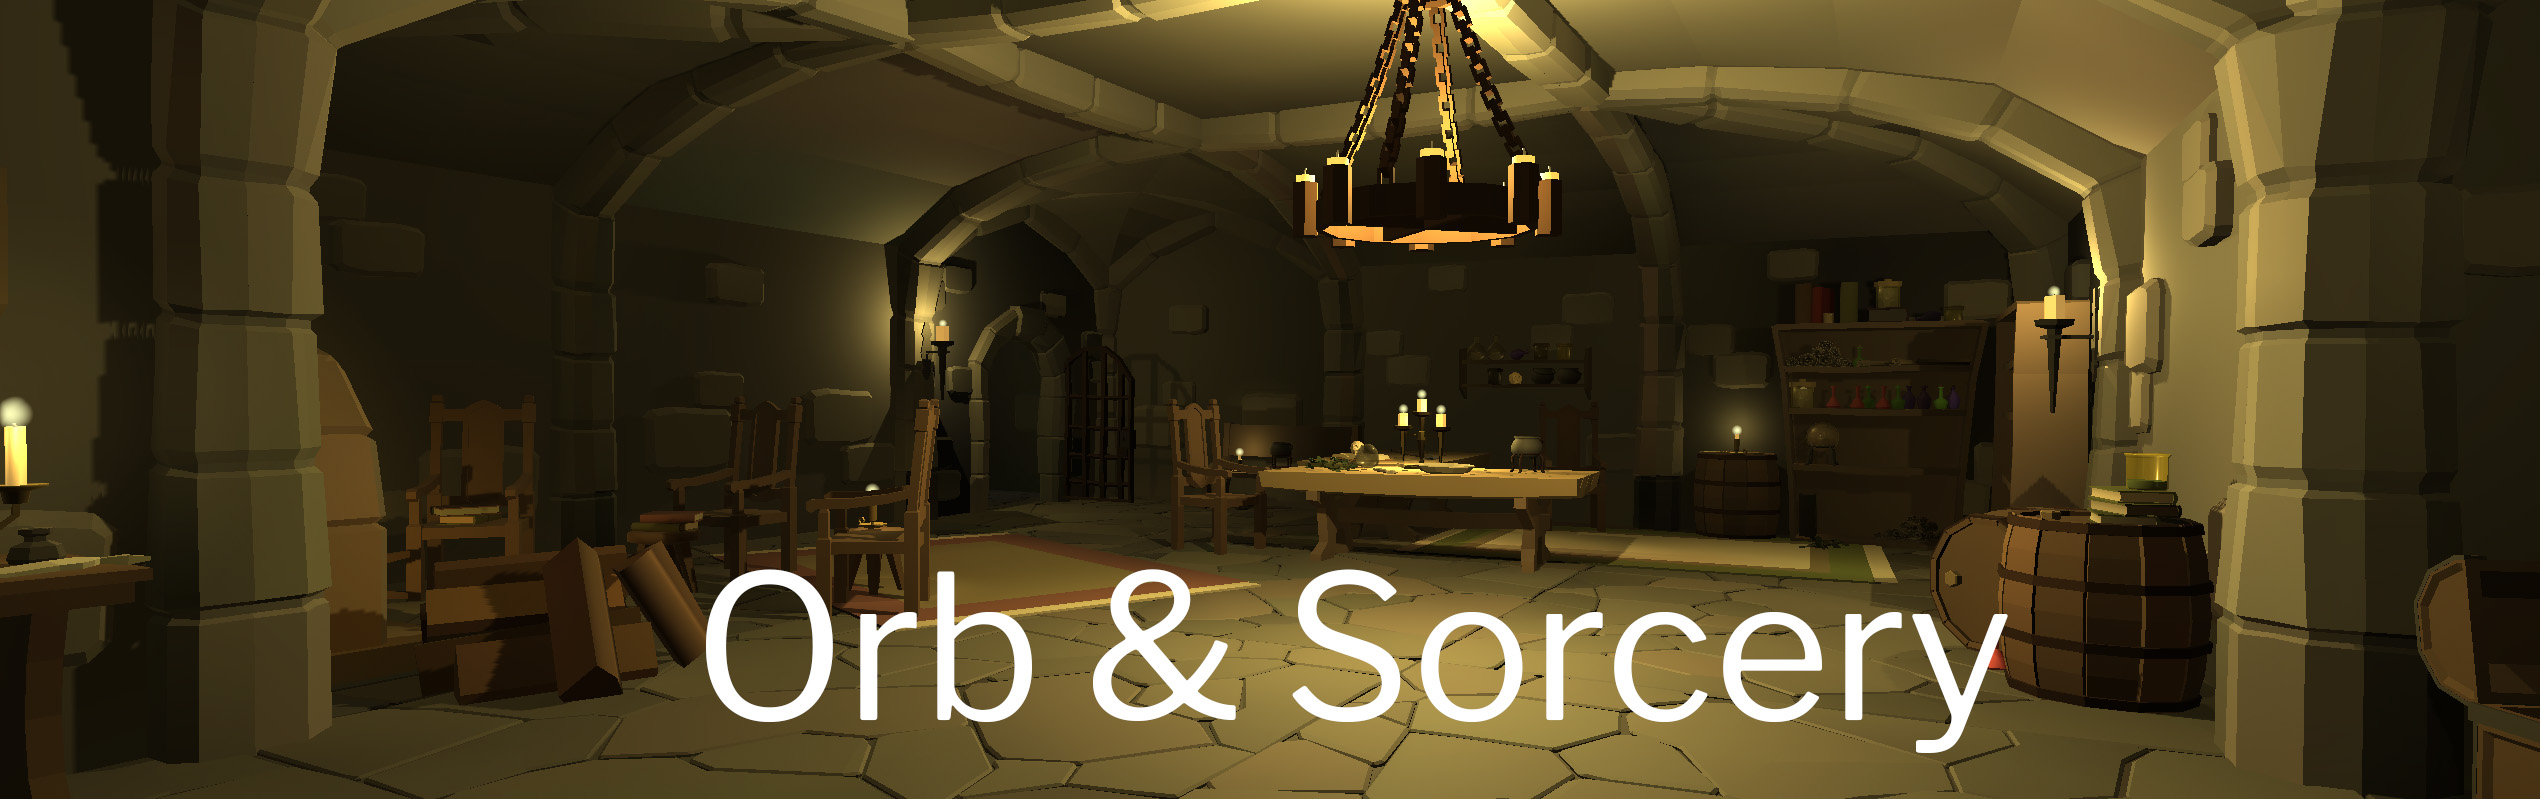 Orb & Sorcery